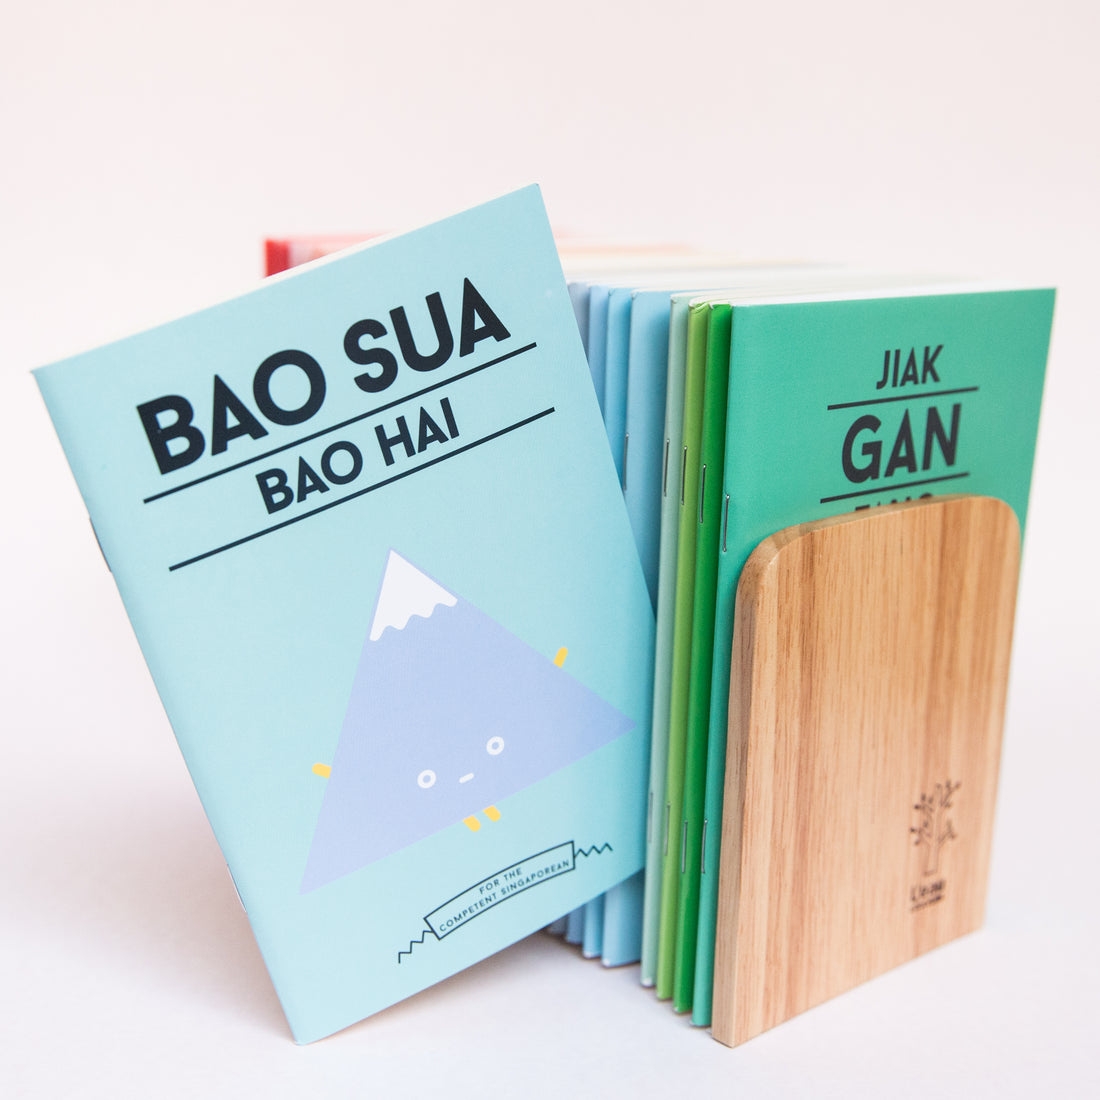 Bao Sua Bao Hai Notebook